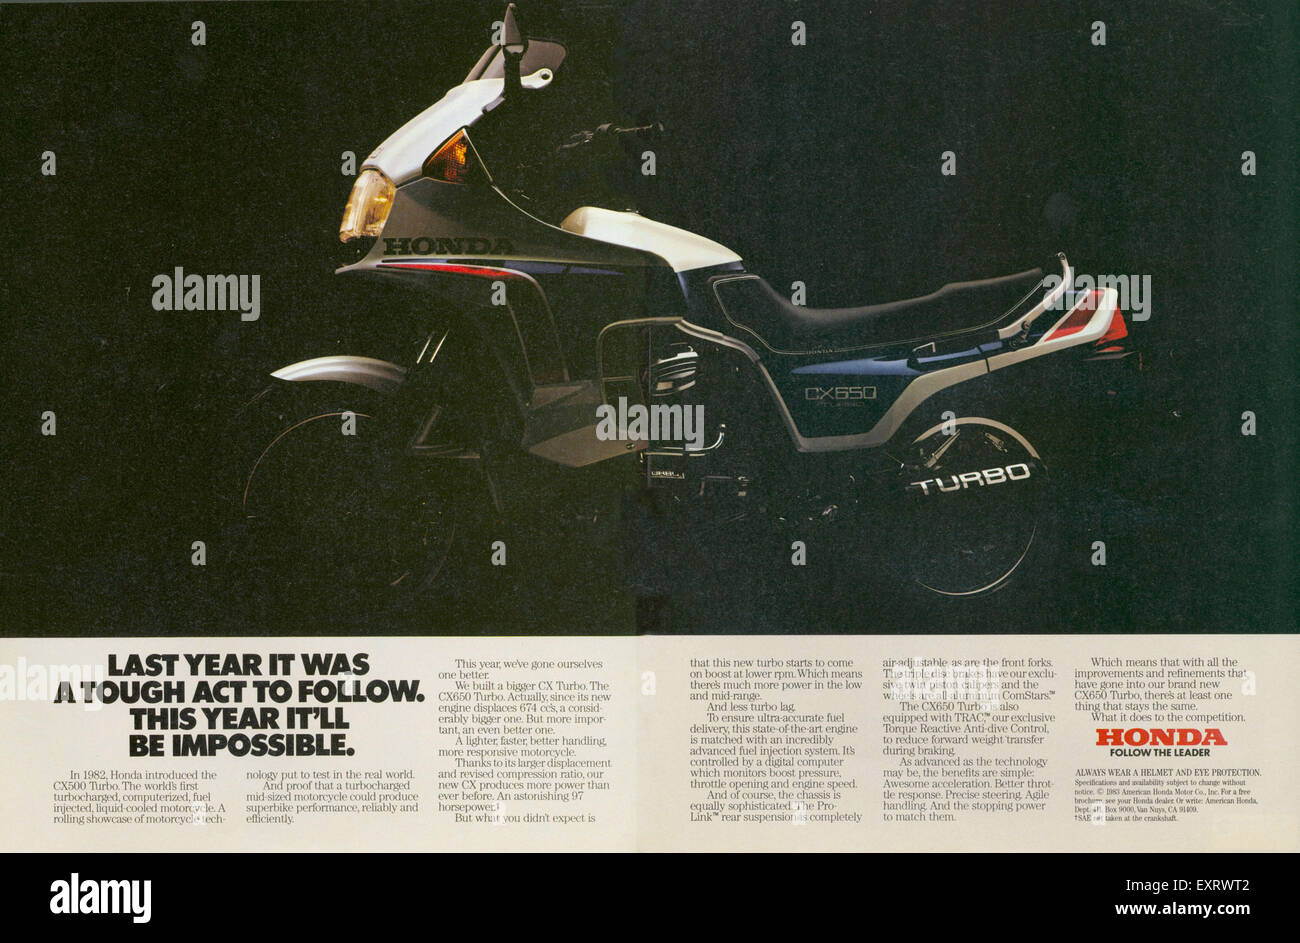 1980er Jahre USA Honda Magazin Anzeige Stockfoto